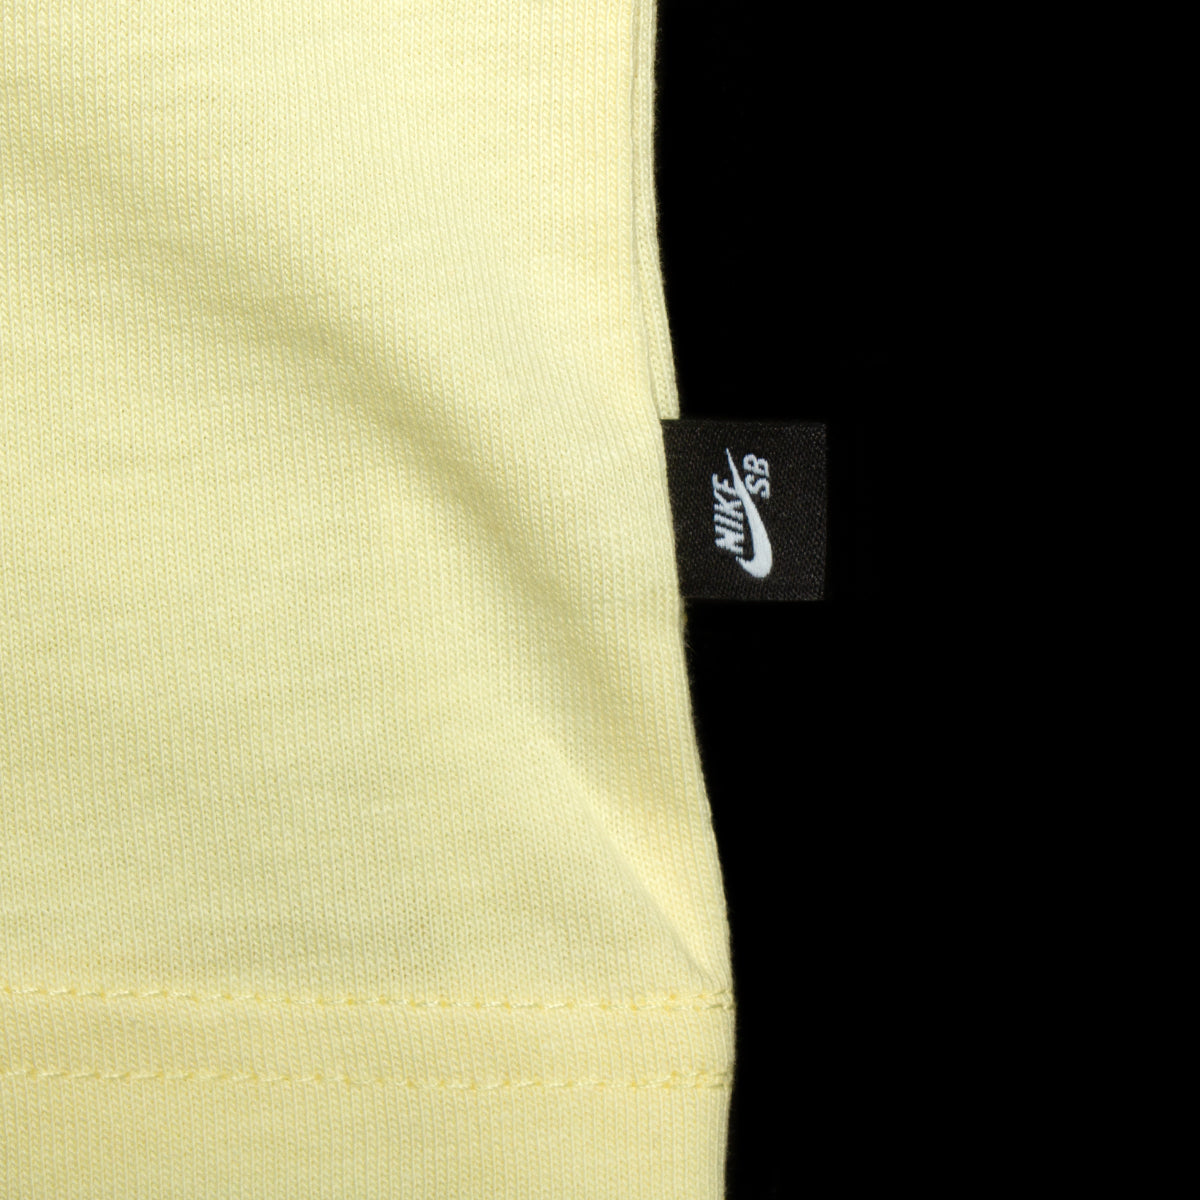 Nike SB | Bike Day T-Shirt Style # FJ1141-744 Color : Alabaster